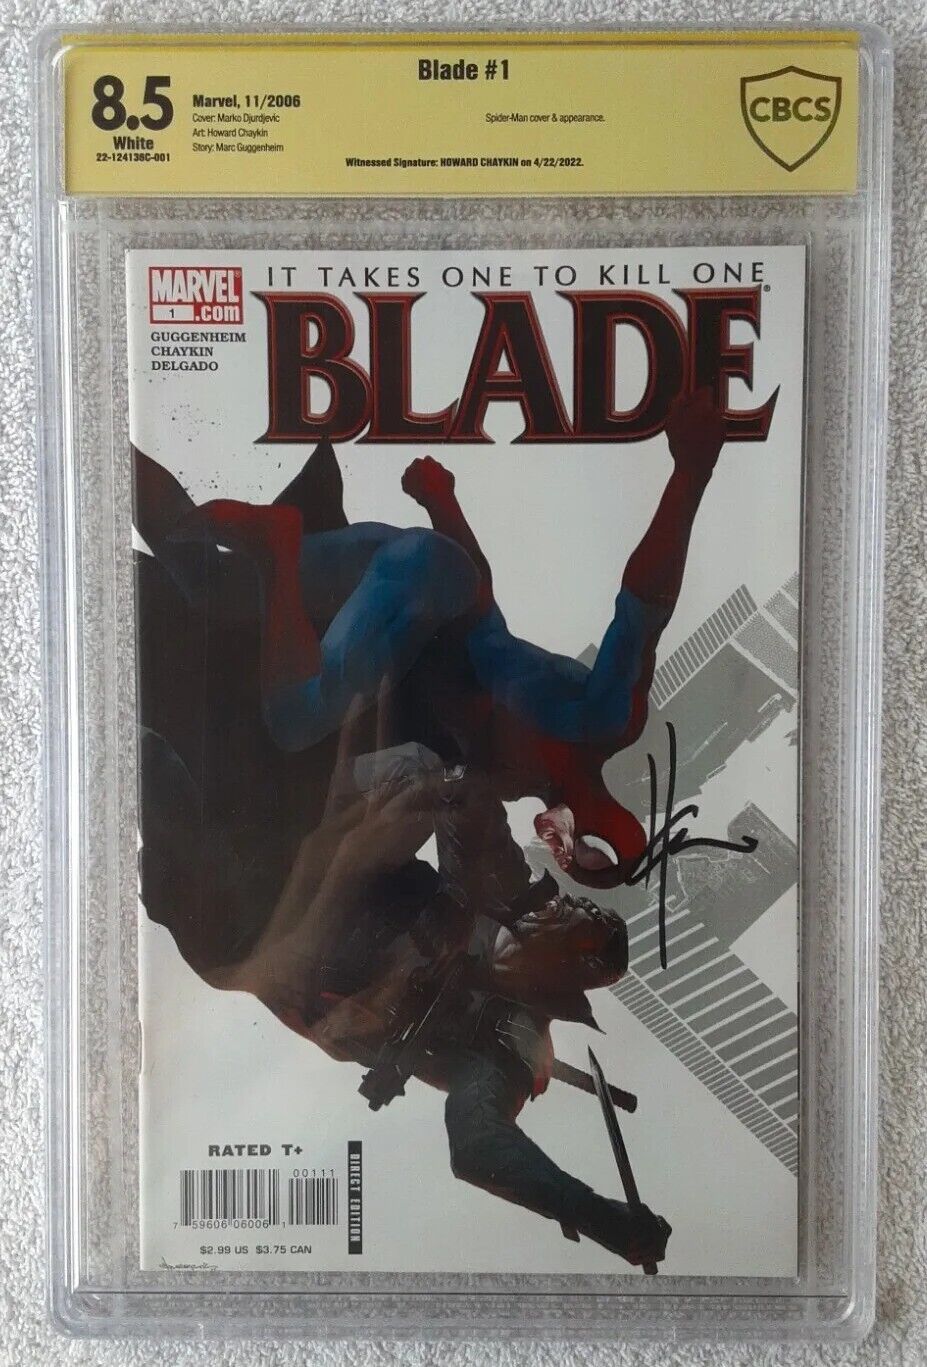 Blade #1 (Marvel, 11/06) CBCS 8.5 VF+ {Witnessed Signature: HOWARD CHAYKIN}